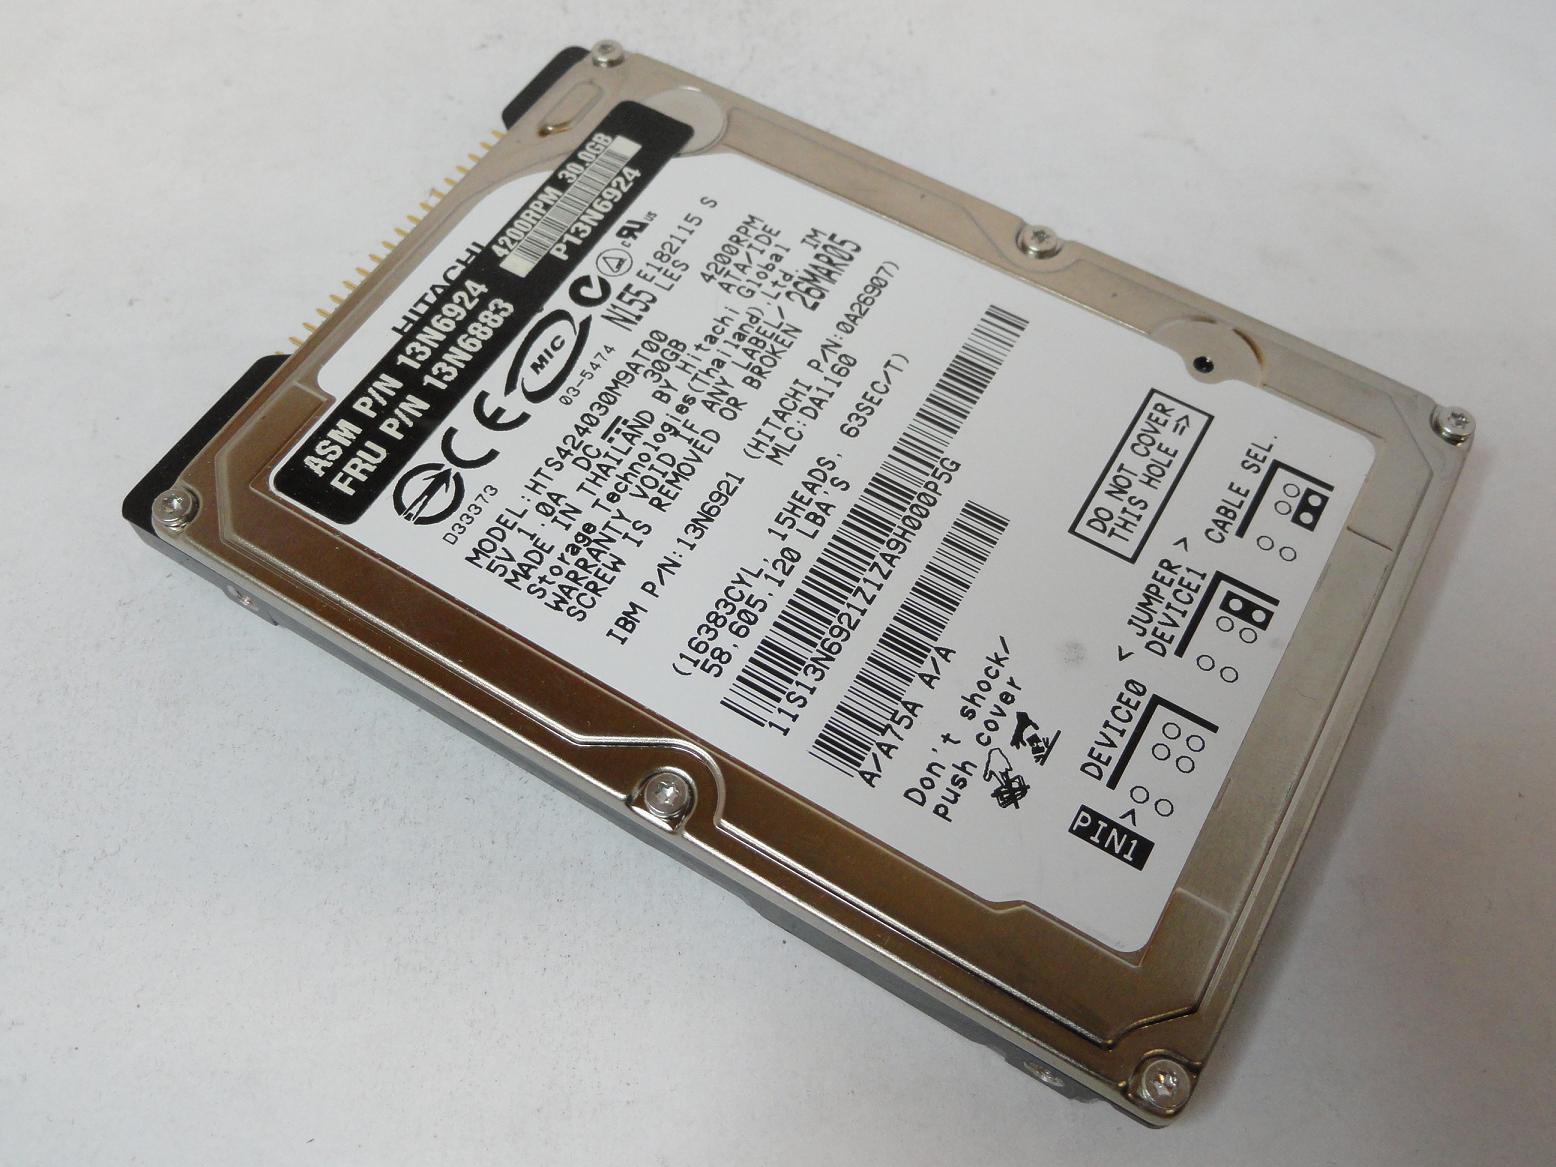 0A26907 - Hitachi IBM 30GB IDE 4200rpm 2.5in HDD - Refurbished